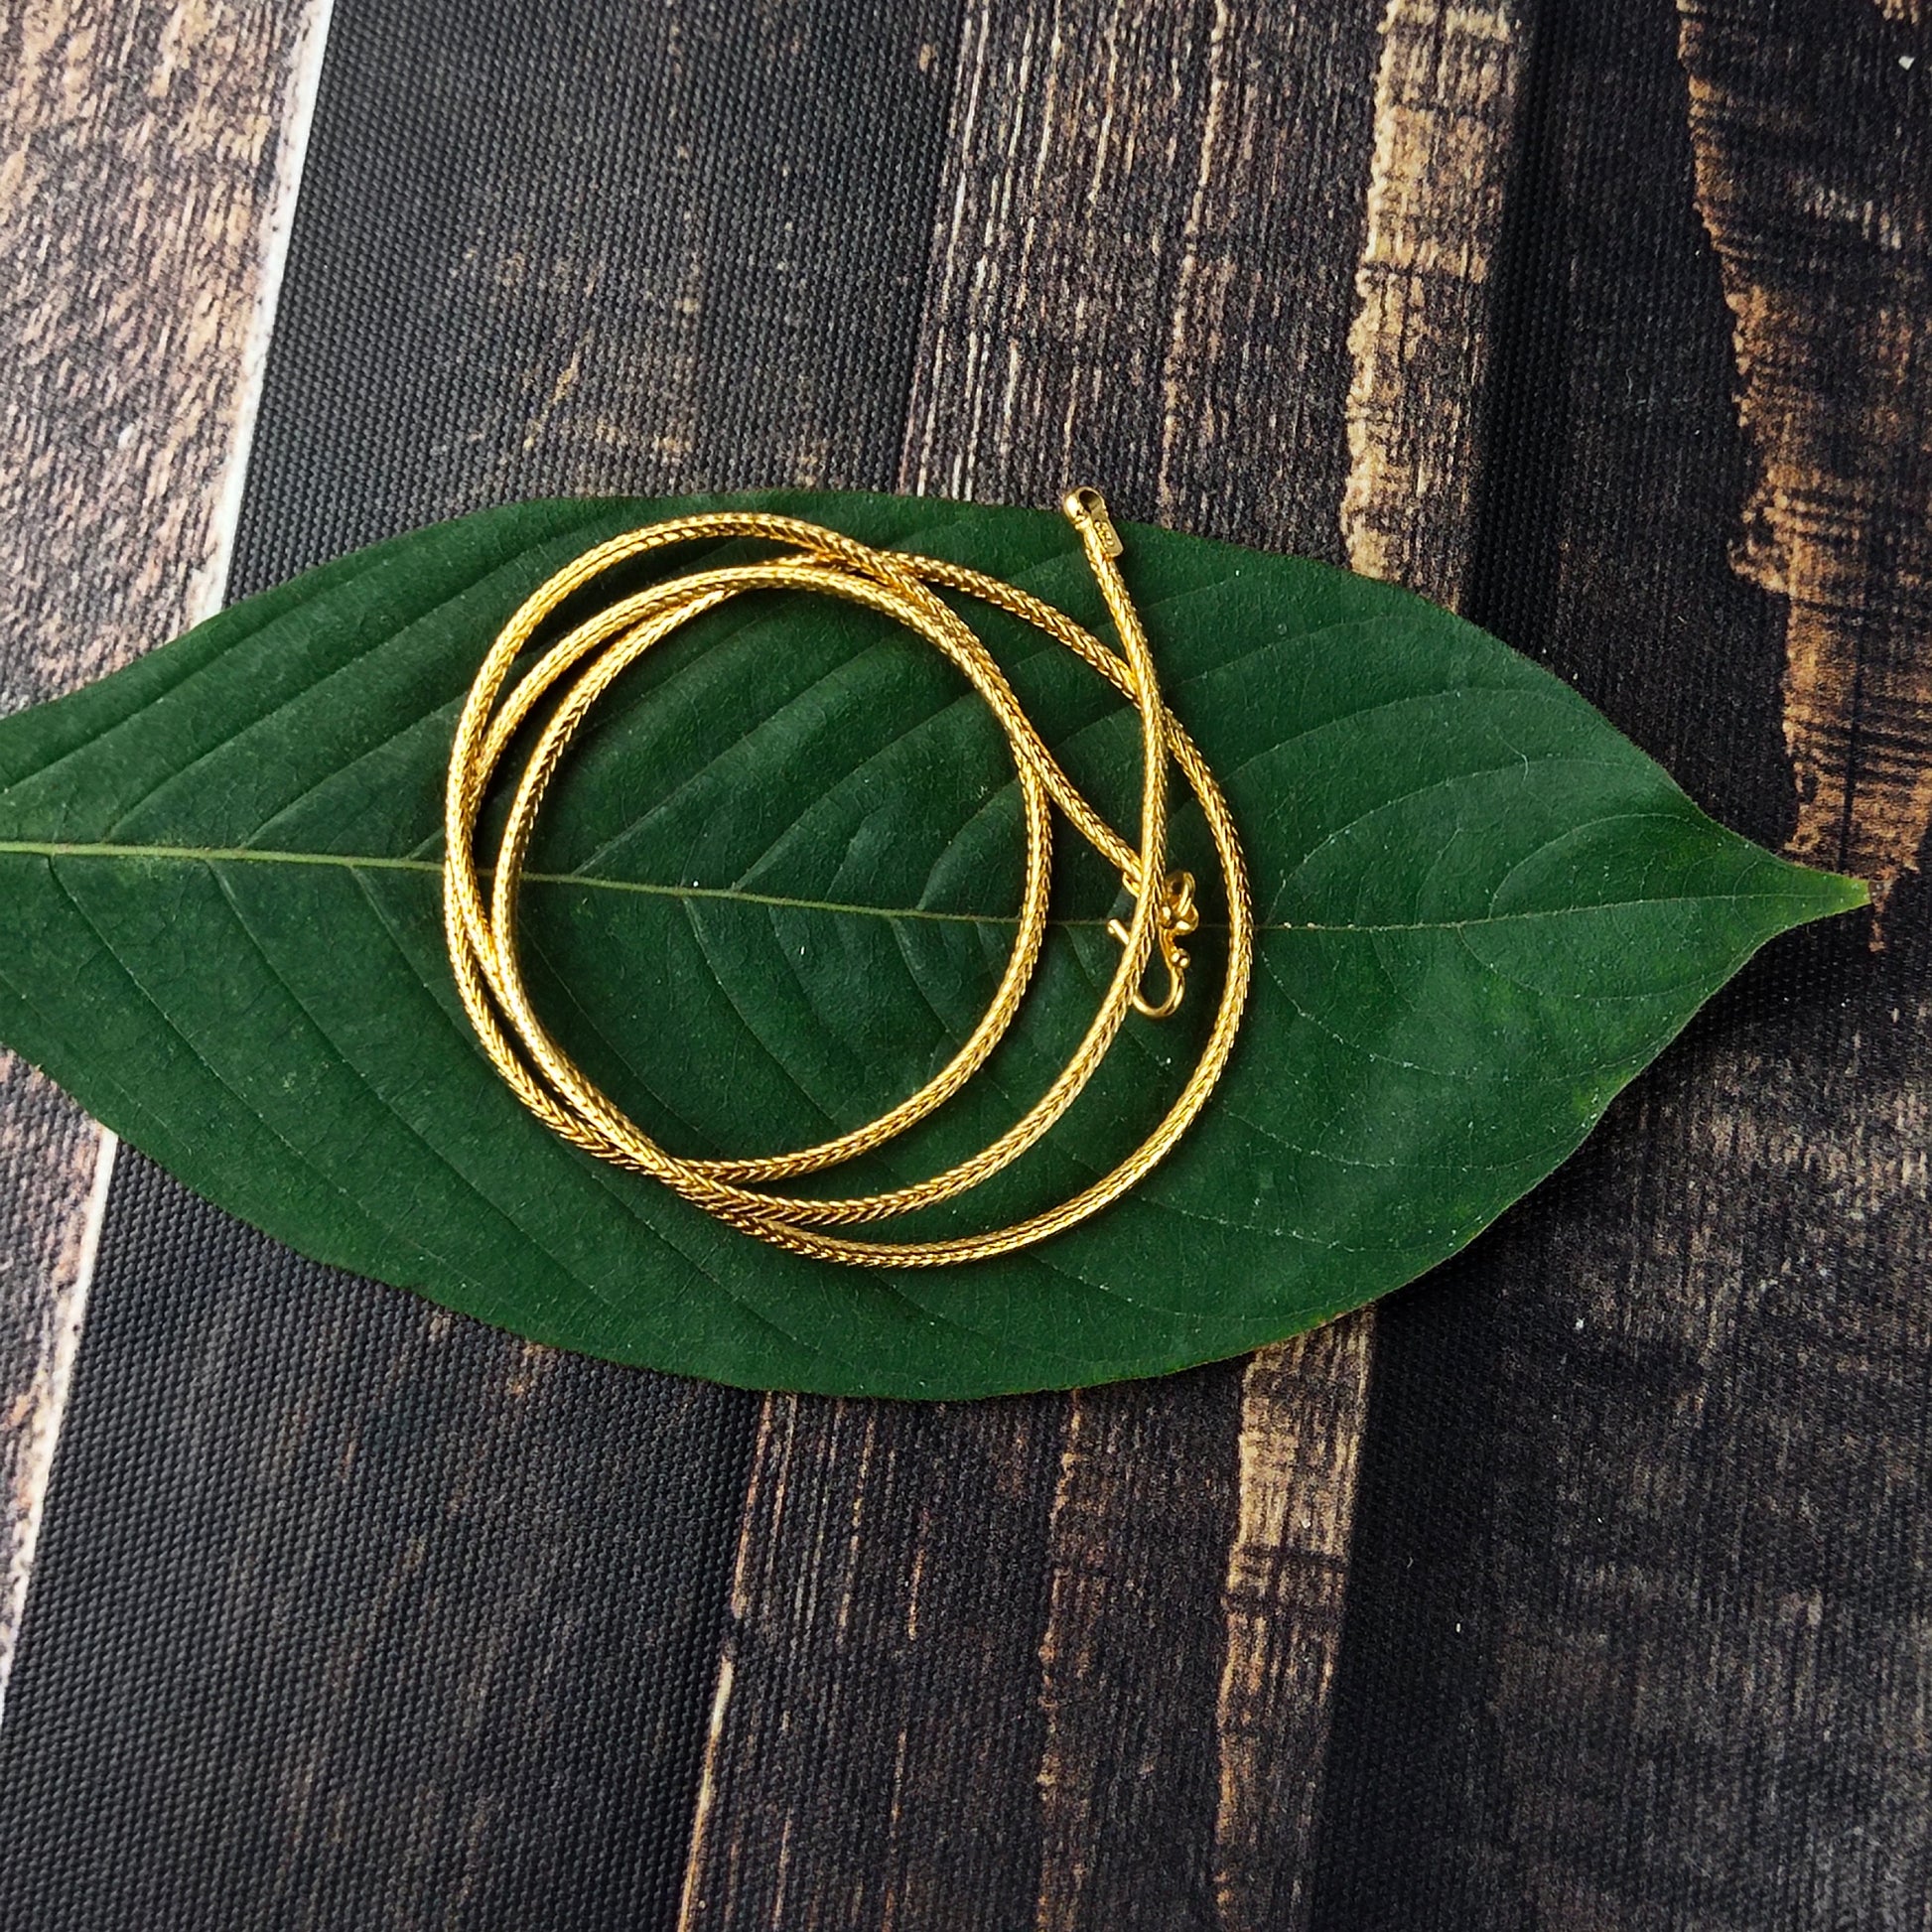 One Gram Gold Jewellery Ideas For Daily Wear Thali Kodi Chain